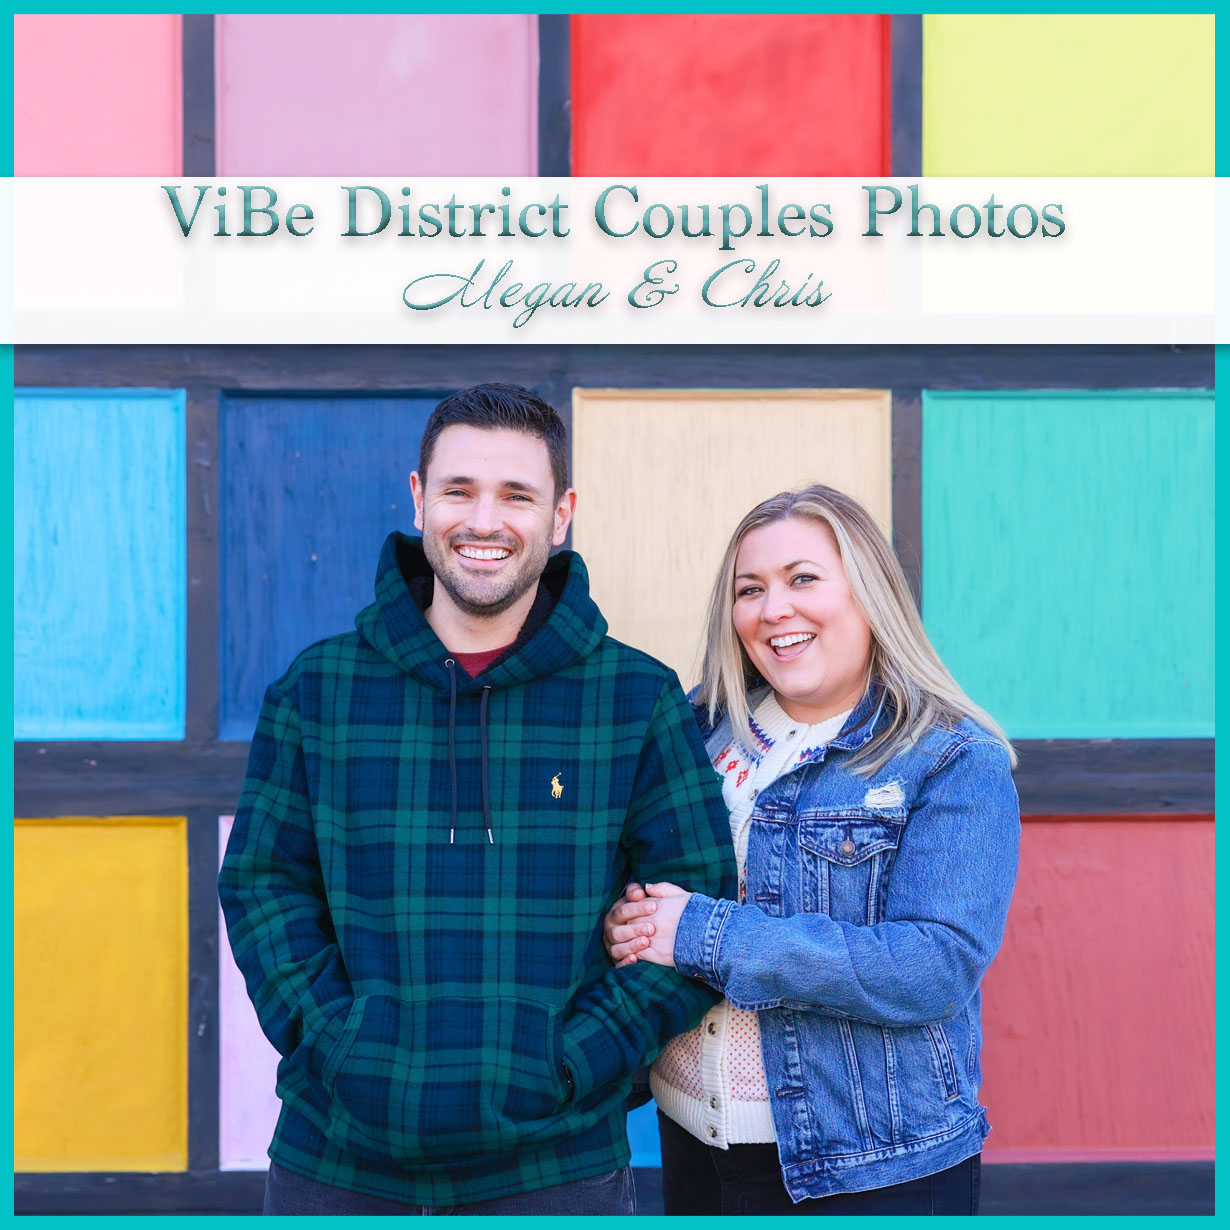 ViBe District Couples Photos